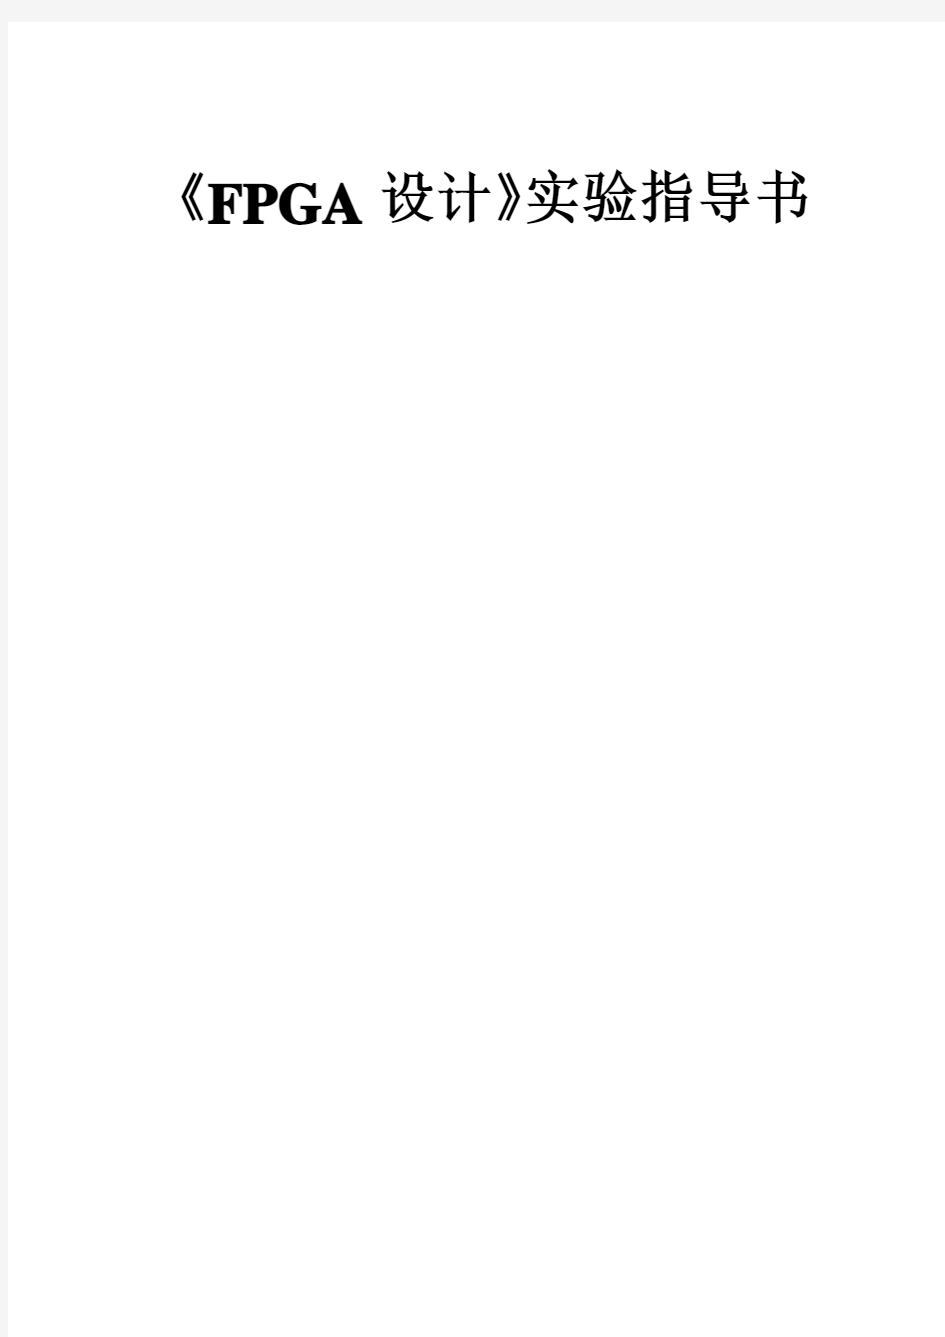 FPGA设计实验指导书(2015)